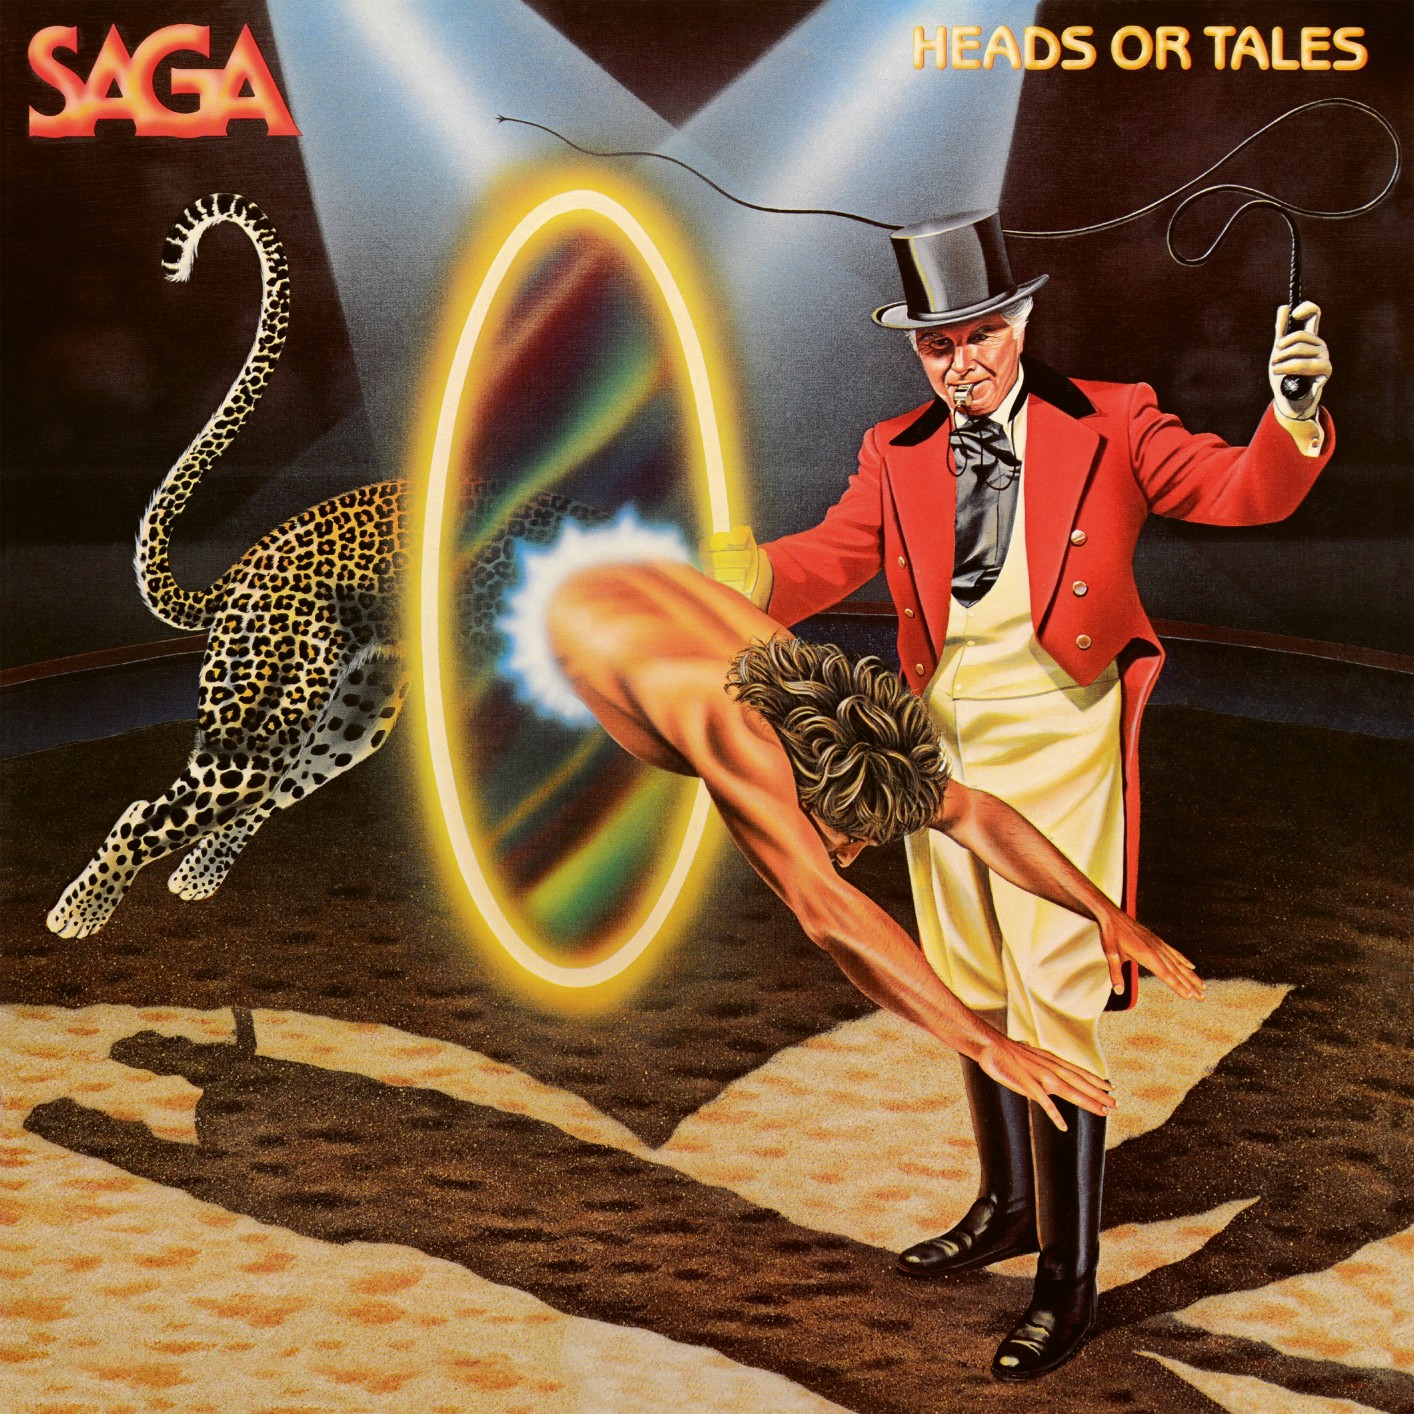 Saga – Heads or Tales (Remastered 2021) (1983/2021) [Official Digital Download 24bit/48kHz]